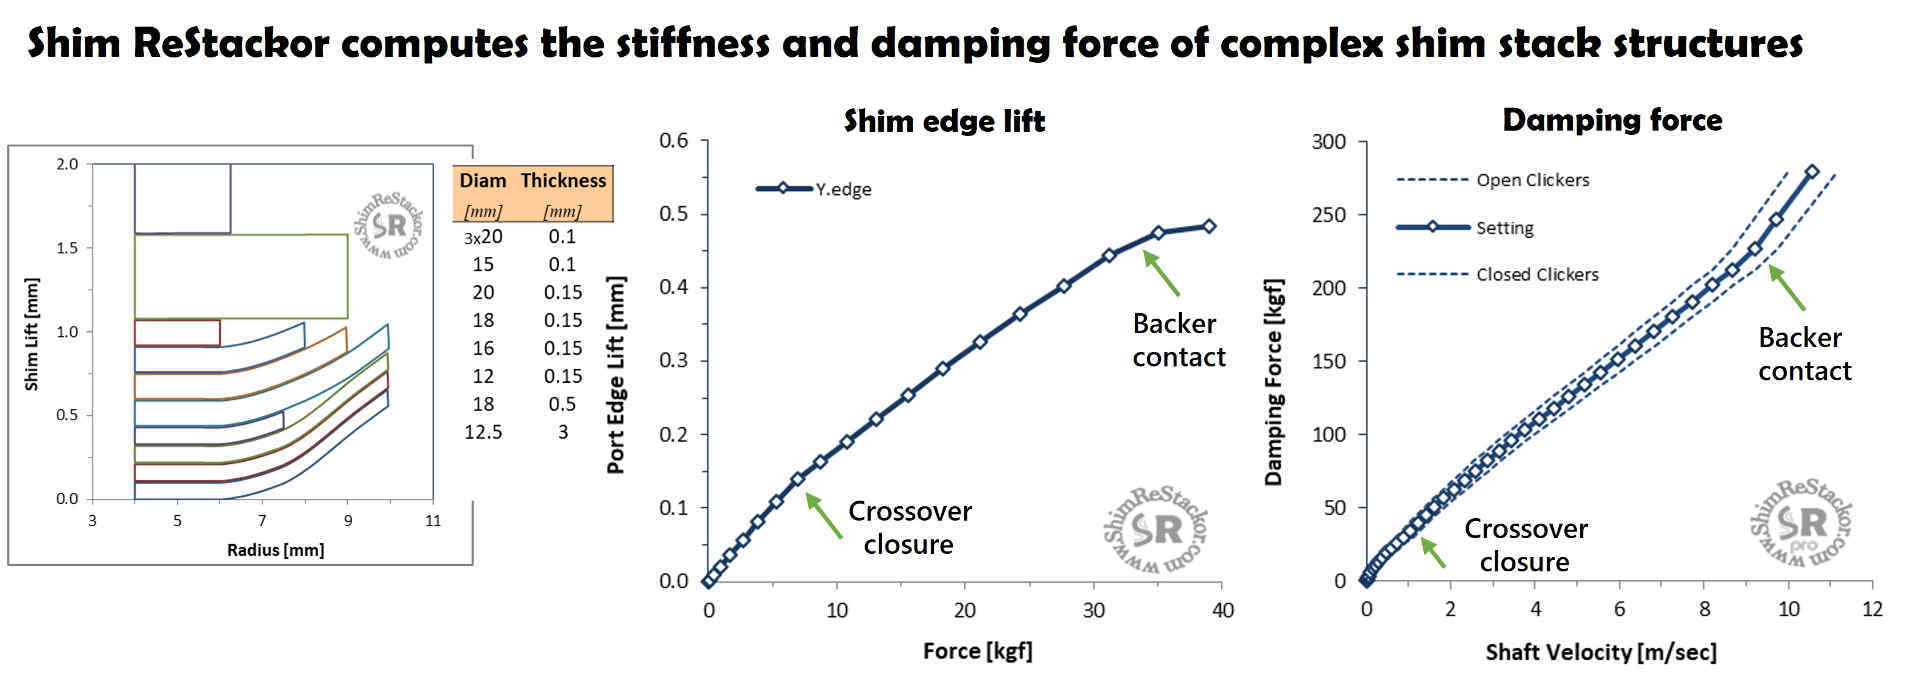 ReStackor shim stack stiffness calculations